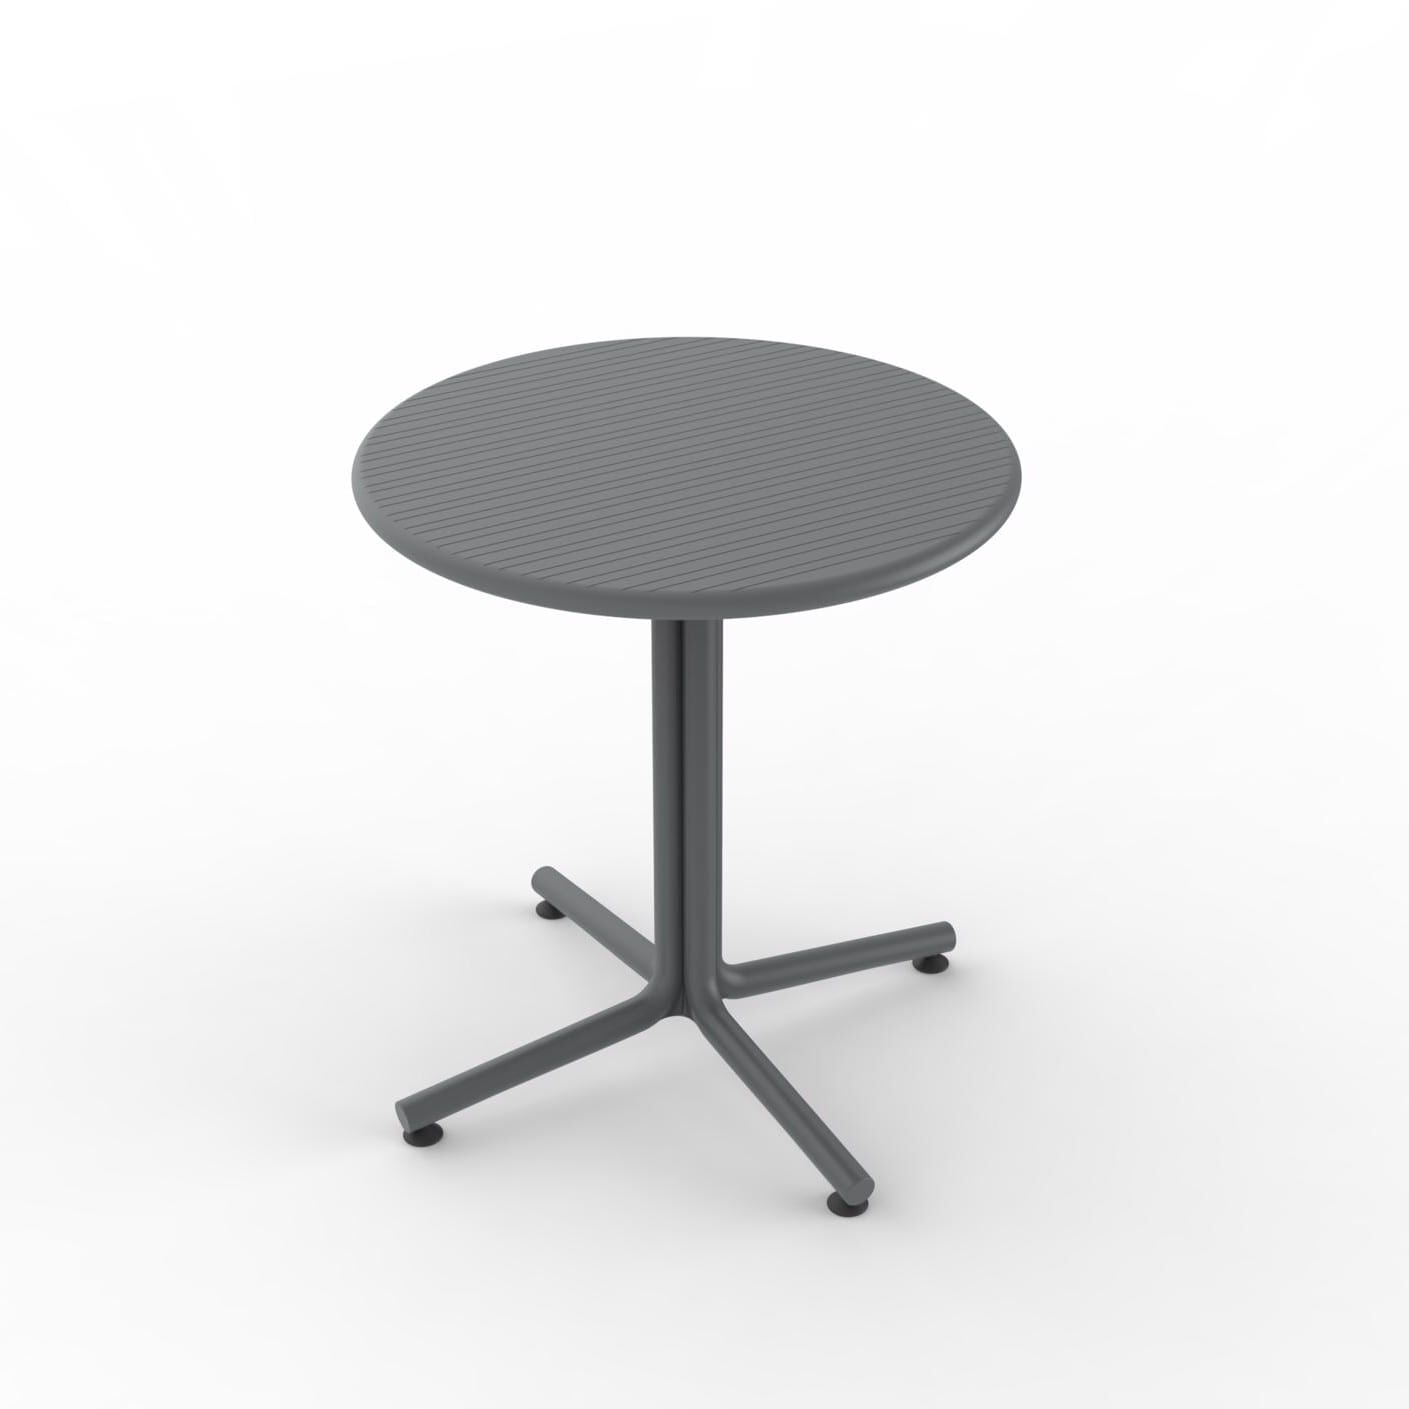 Resol bini round table indoors, outdoor Ø70 dark gray